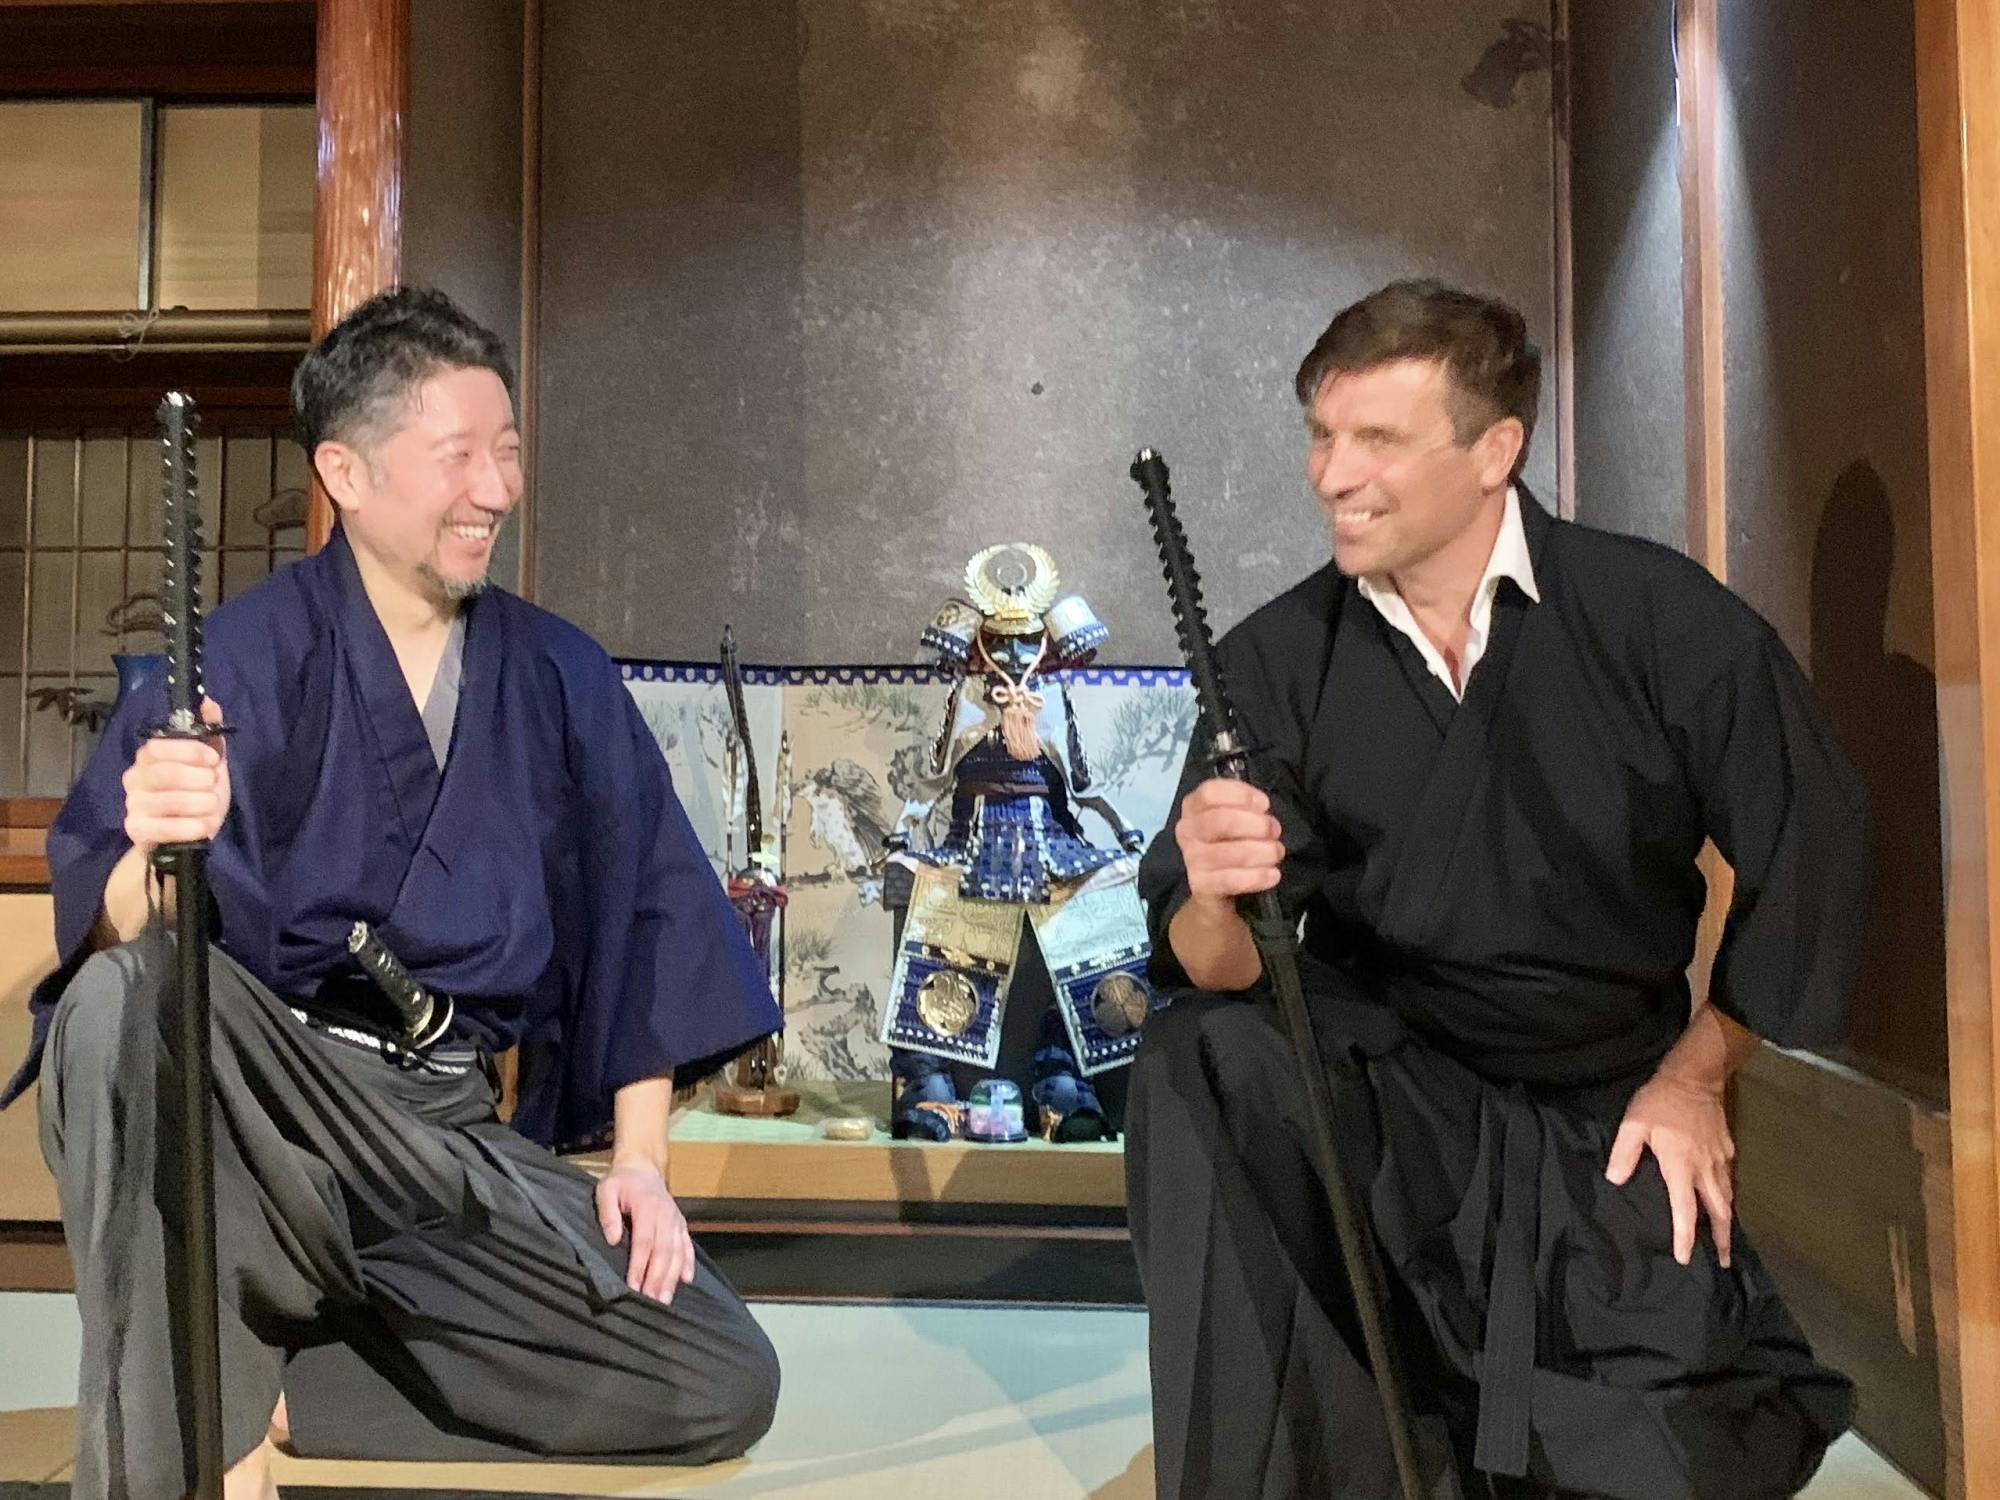 Asakusa Guided Tour with Samurai Drama Show and Samurai Experience